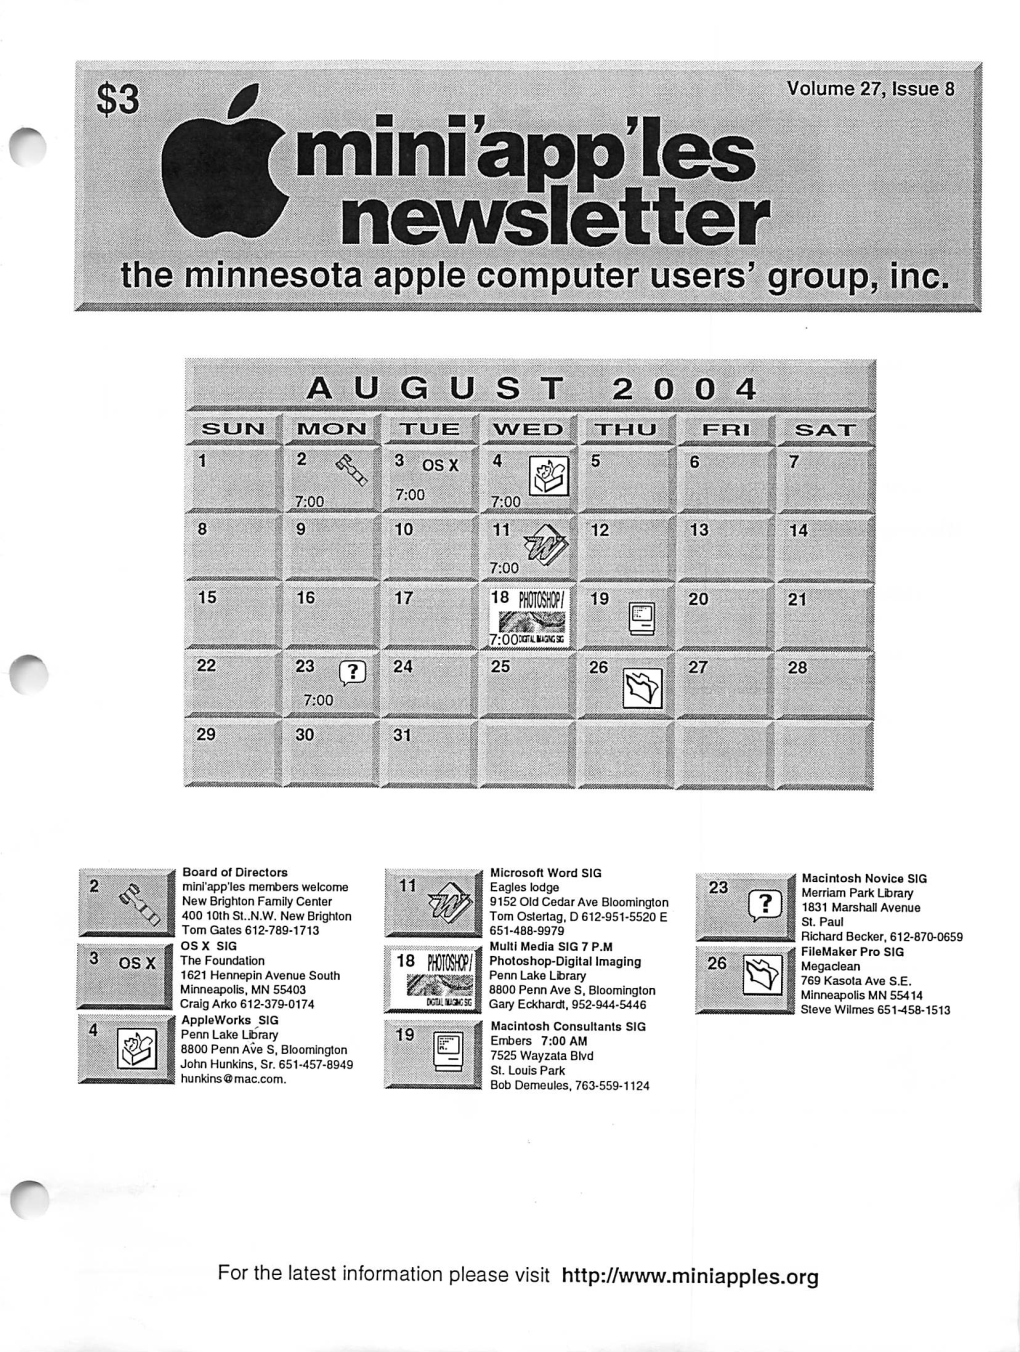 Mini'apples Newsletter the Minnesota Apple Computer Users5 Groups Inc